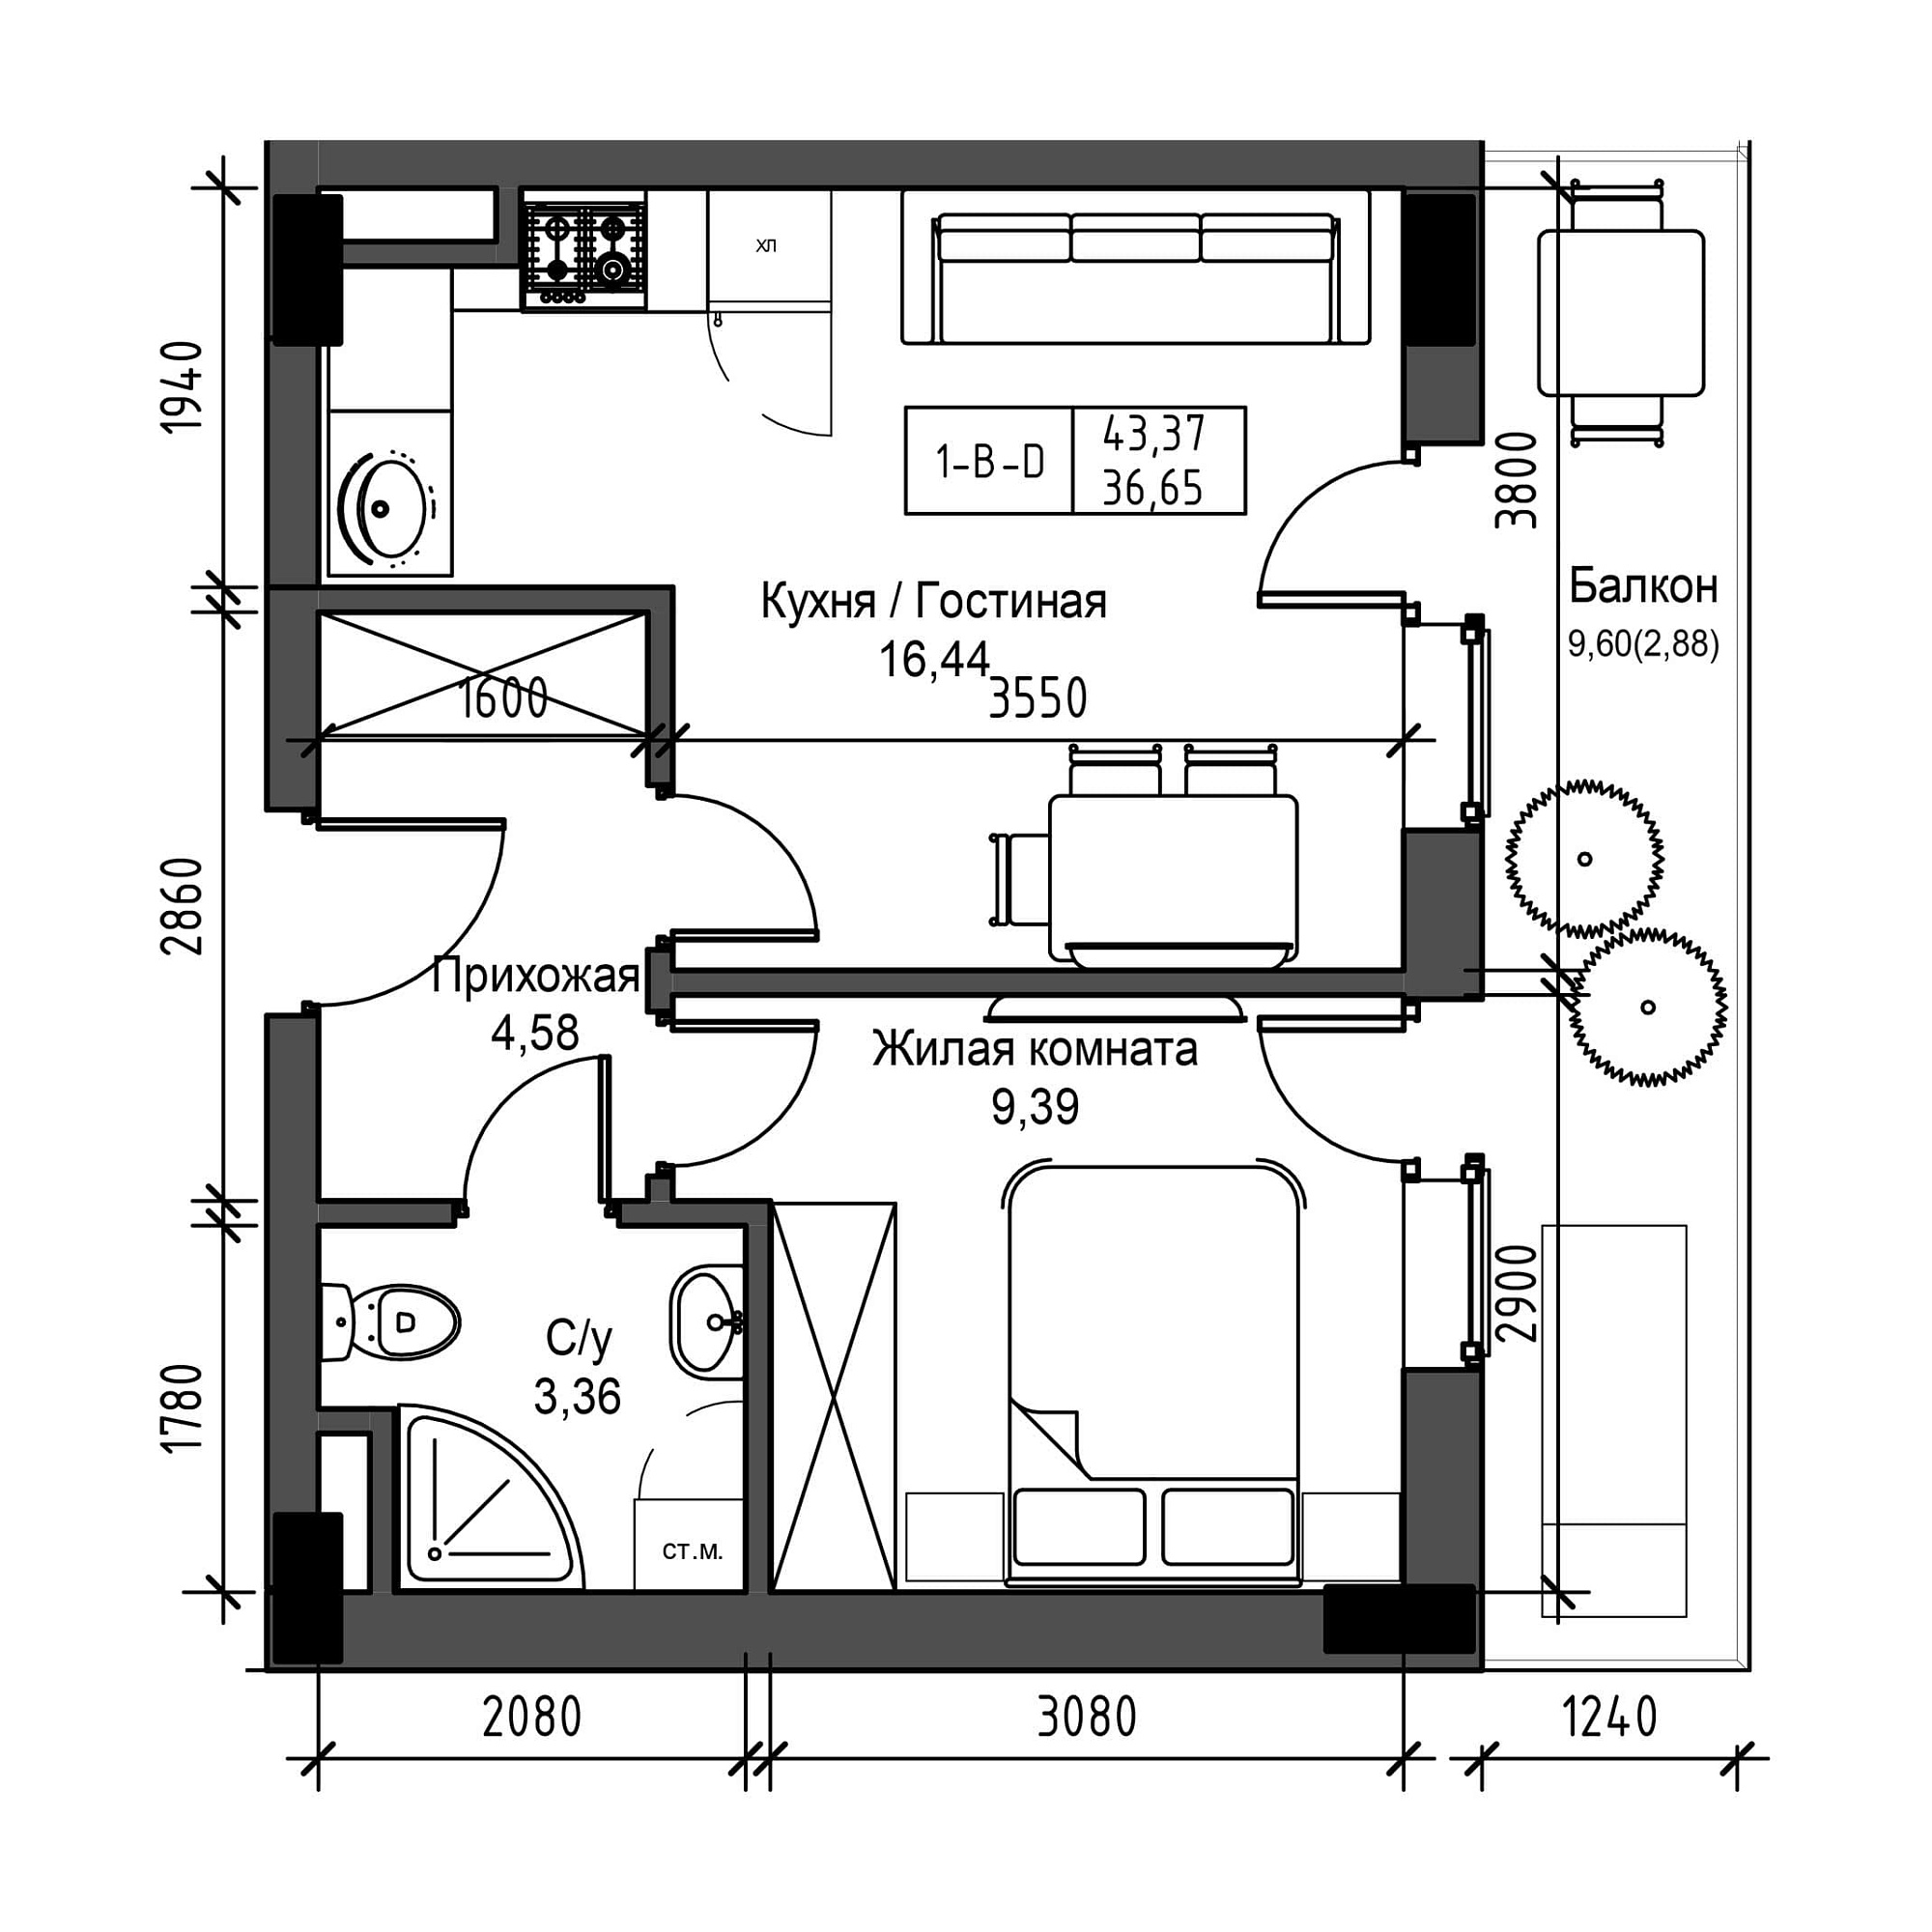 Планування 1-к квартира площею 36.65м2, UM-001-06/0002.